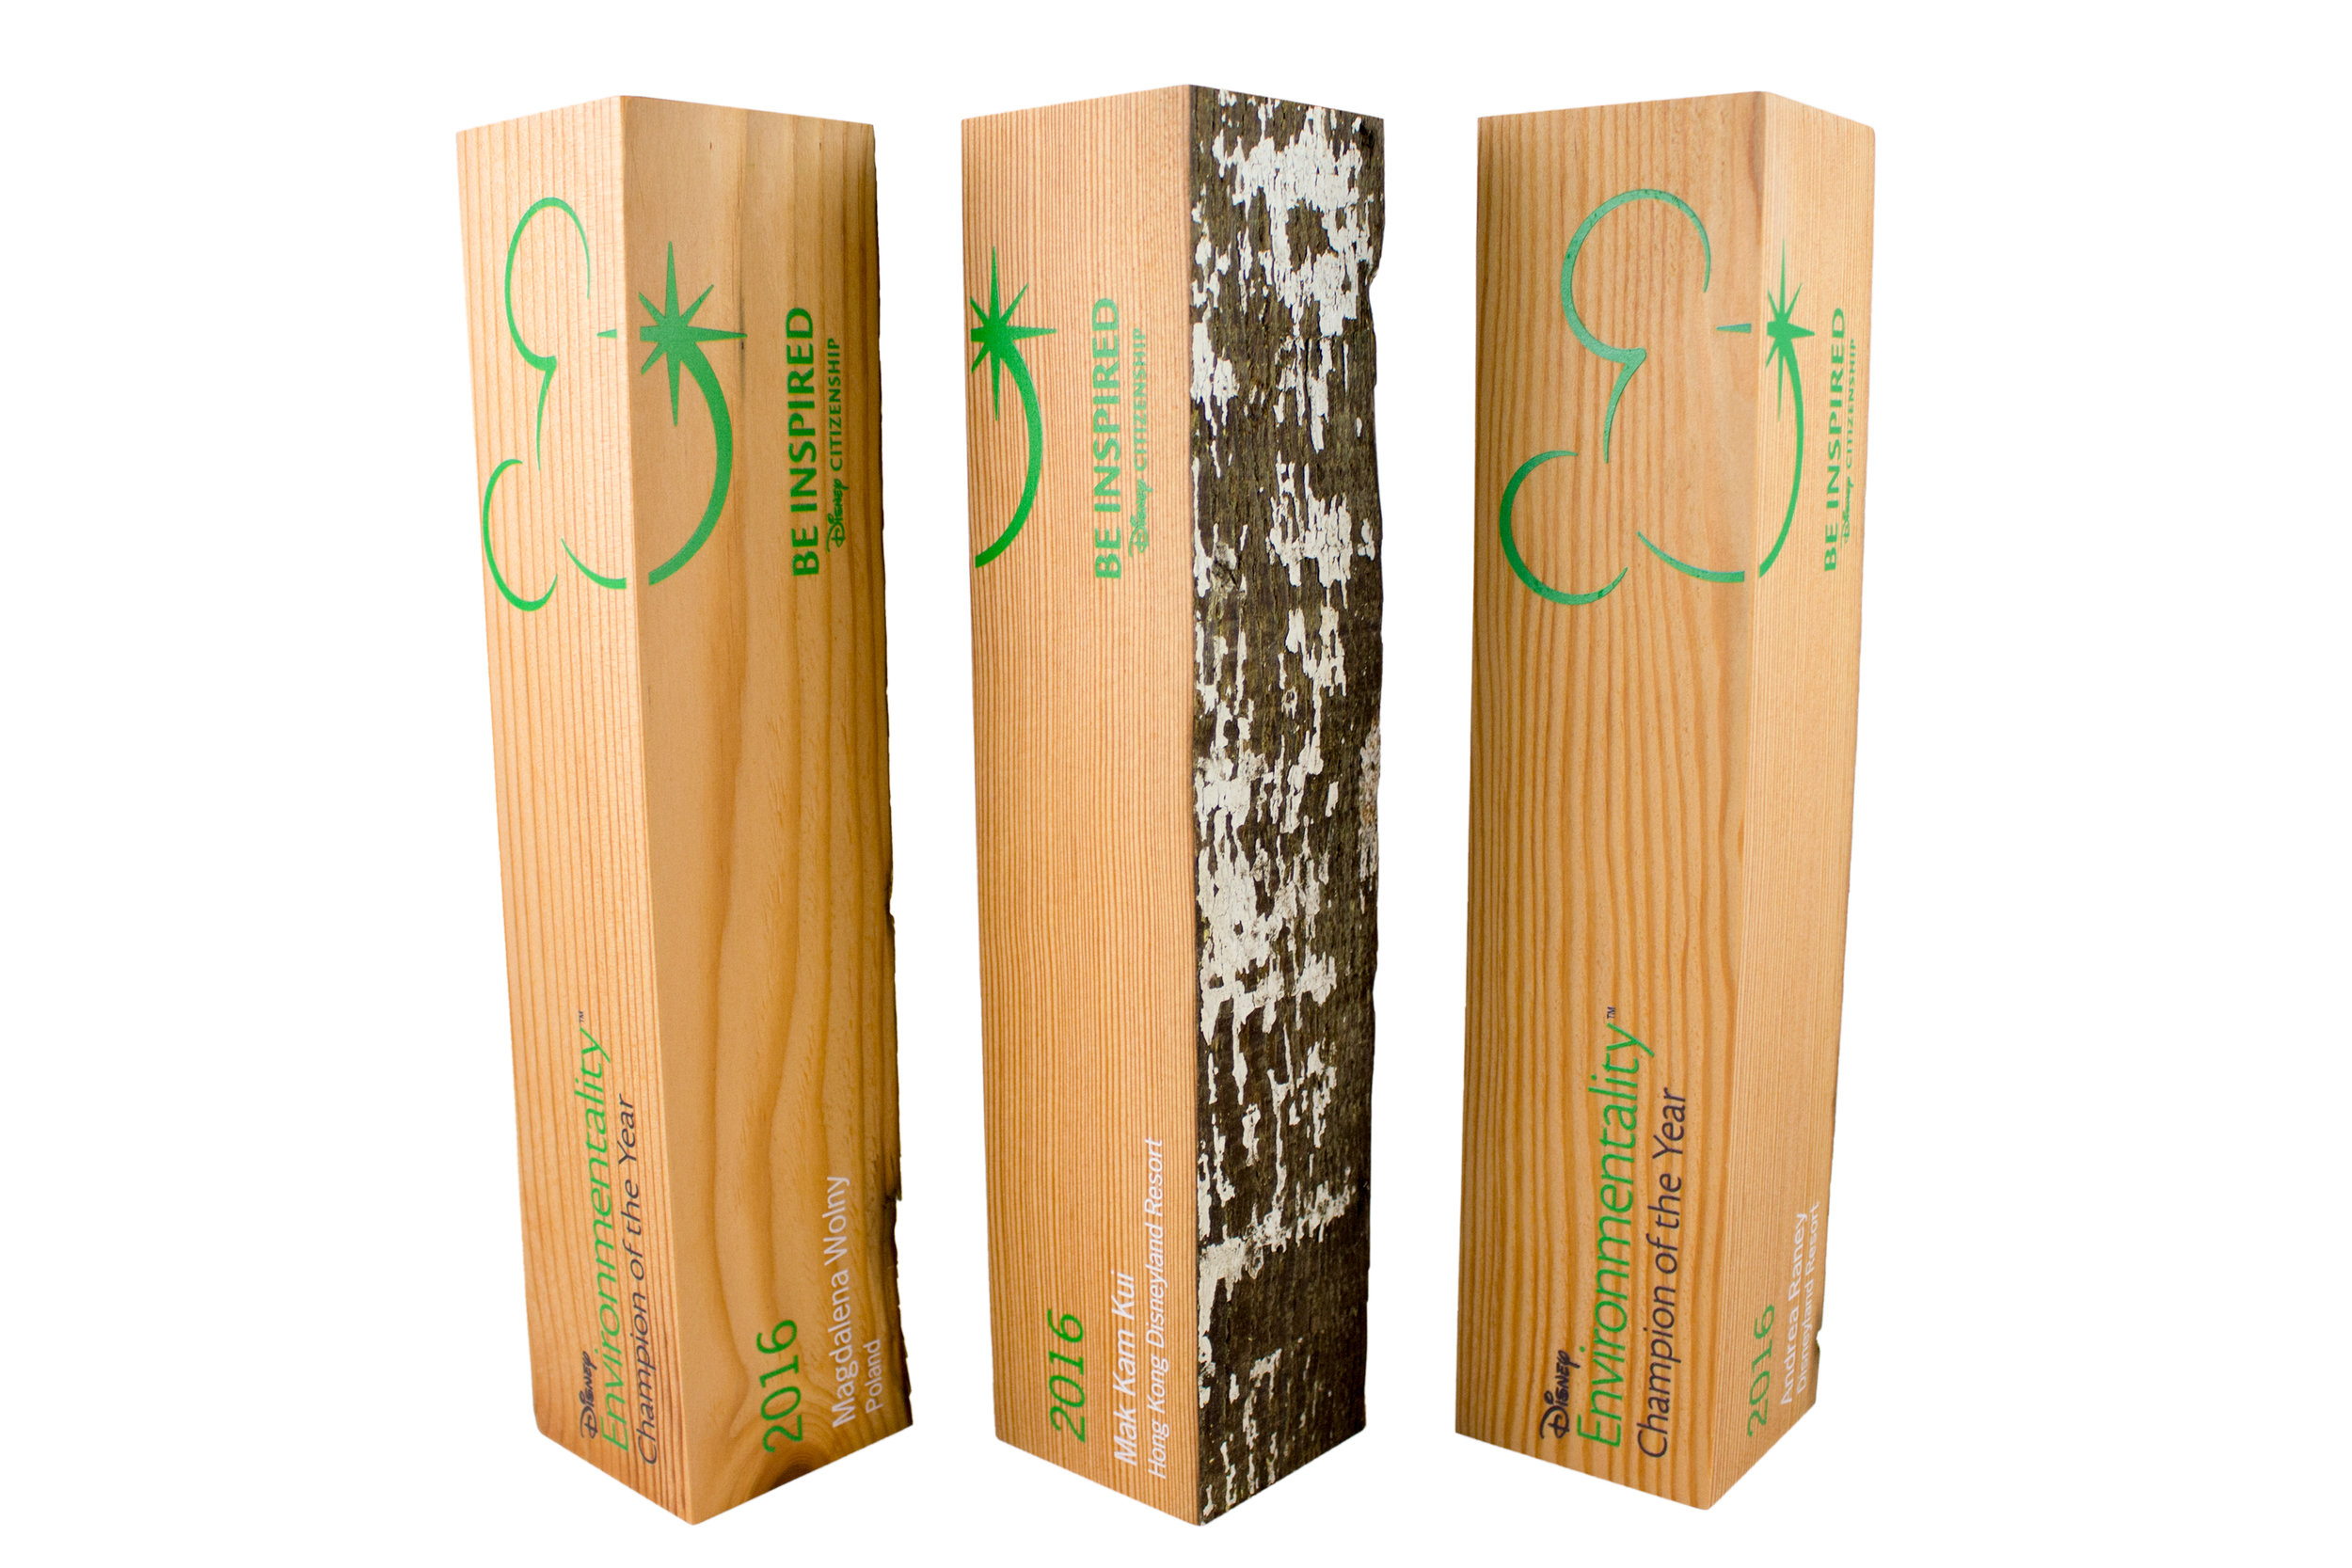 disney custom environmental awards recovered wood